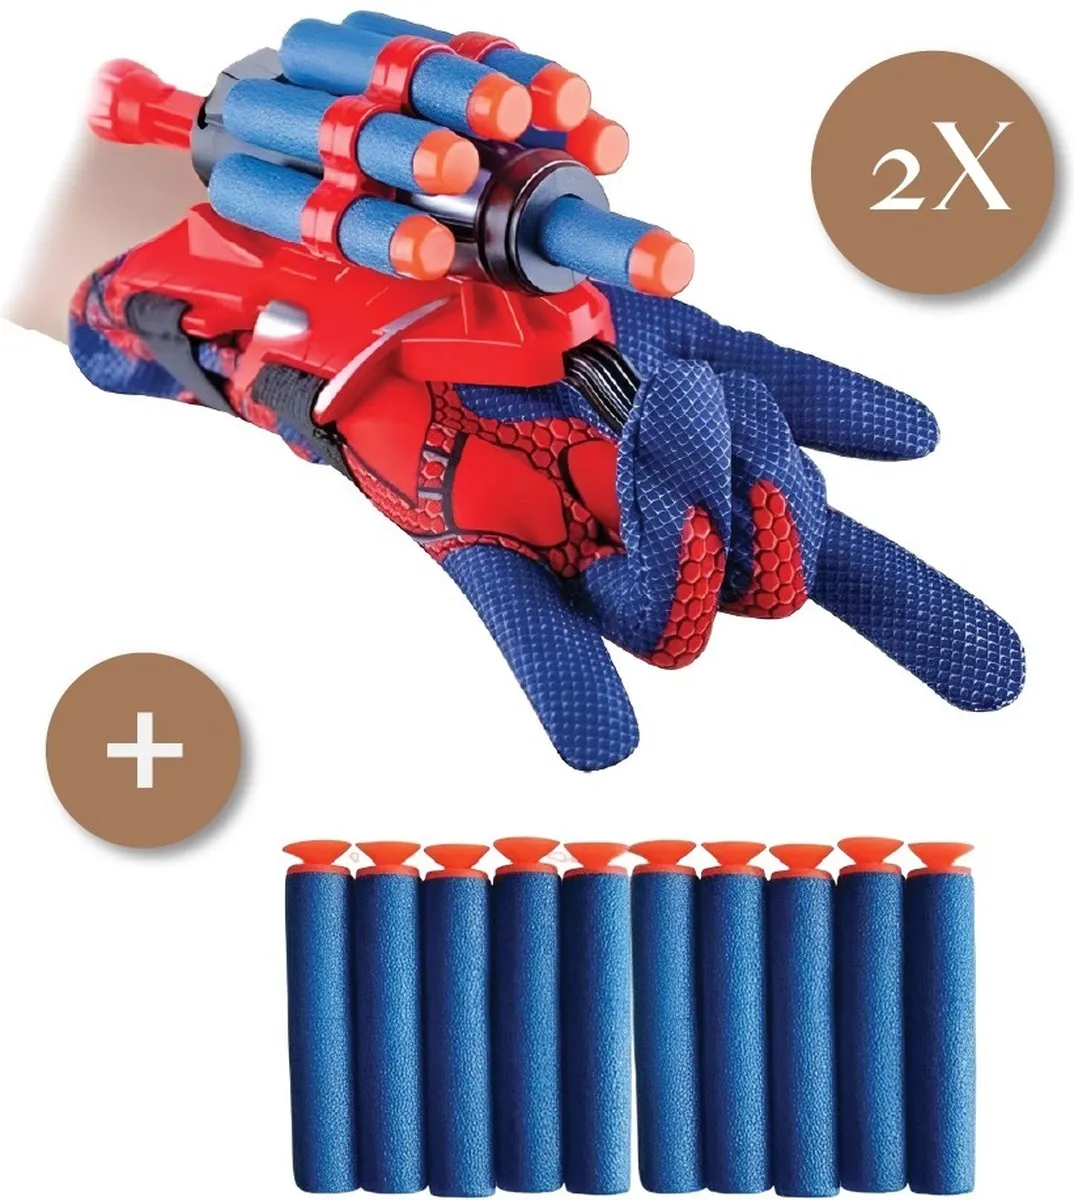 Waay Lifestyle Spiderman Web Shooter - Nerf editie - 2 x Spiderman Handschoen - 2 x Spiderman Web Shooter - Incl. 20 Nerf pijltjes - Nerf Gun - Spiderman Speelgoed - Spiderman launcher - Blauw Rood - Carnaval - Carnavals Accessoires speelgoed